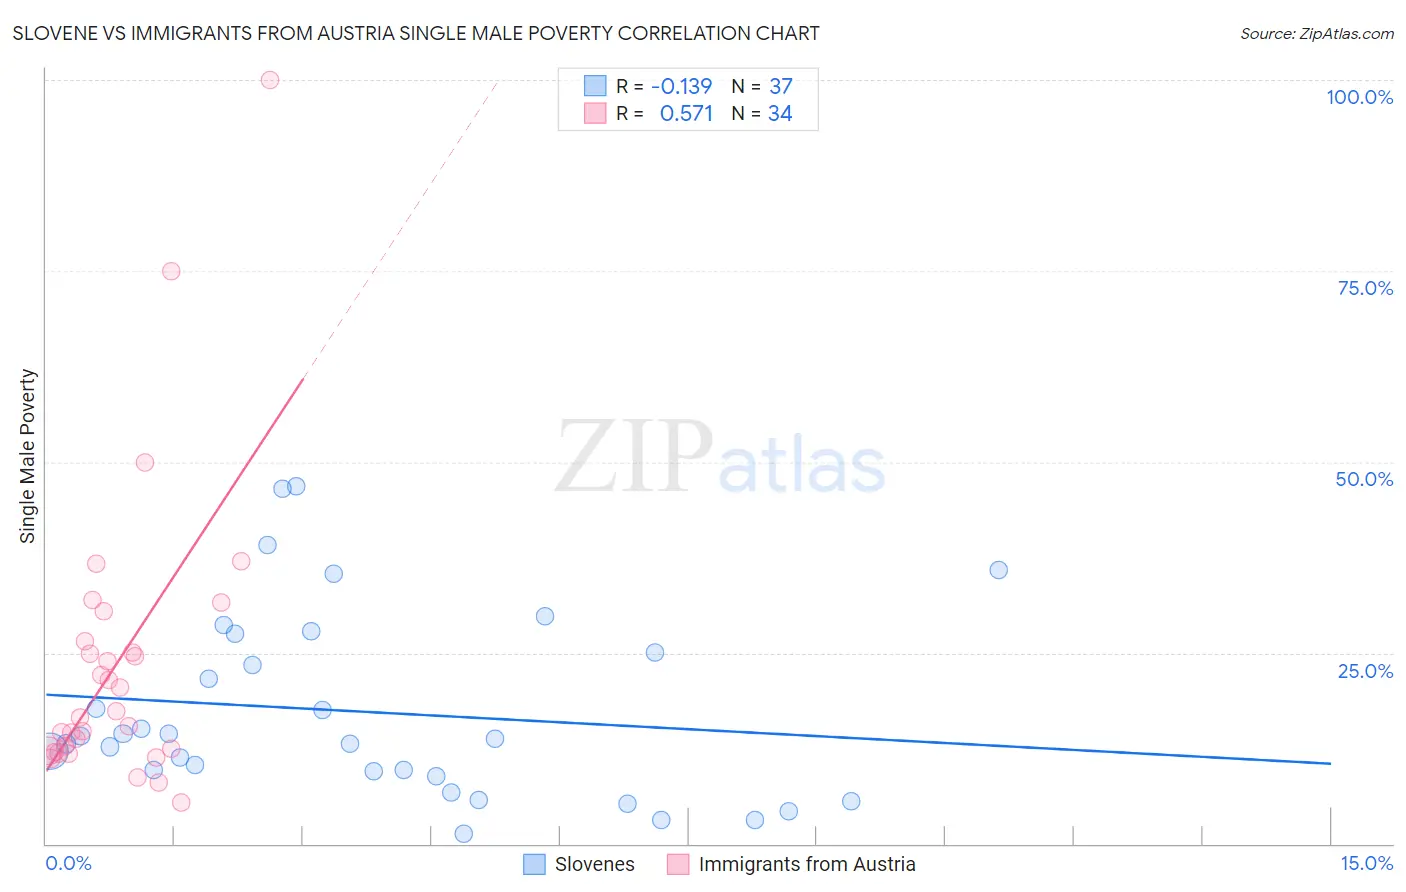 Slovene vs Immigrants from Austria Single Male Poverty